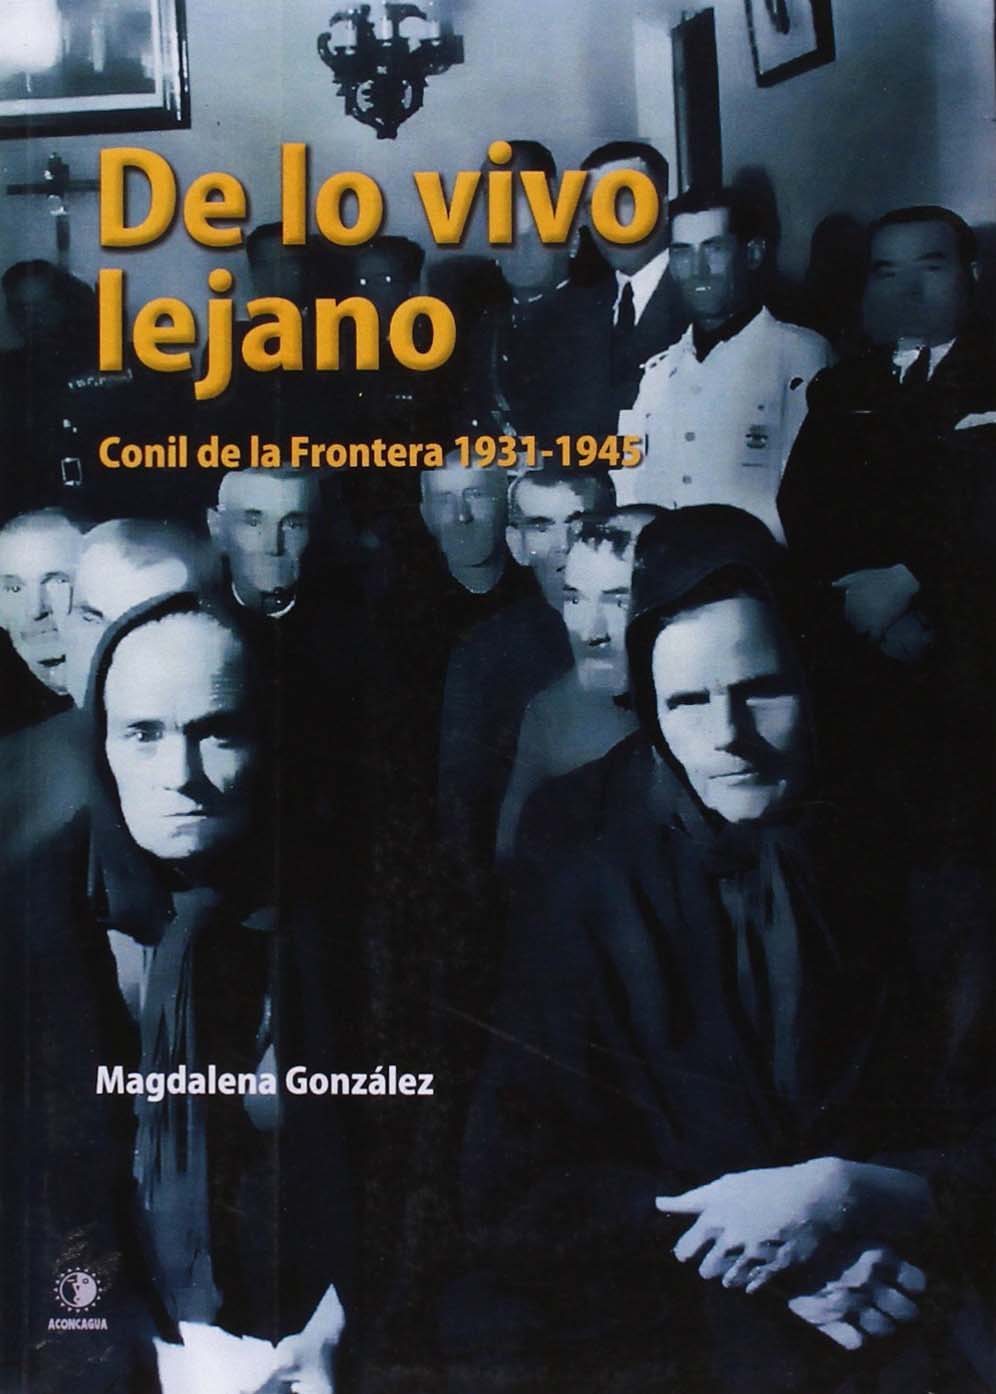 De lo vivo lejano: Conil de la Frontera 1931-1945